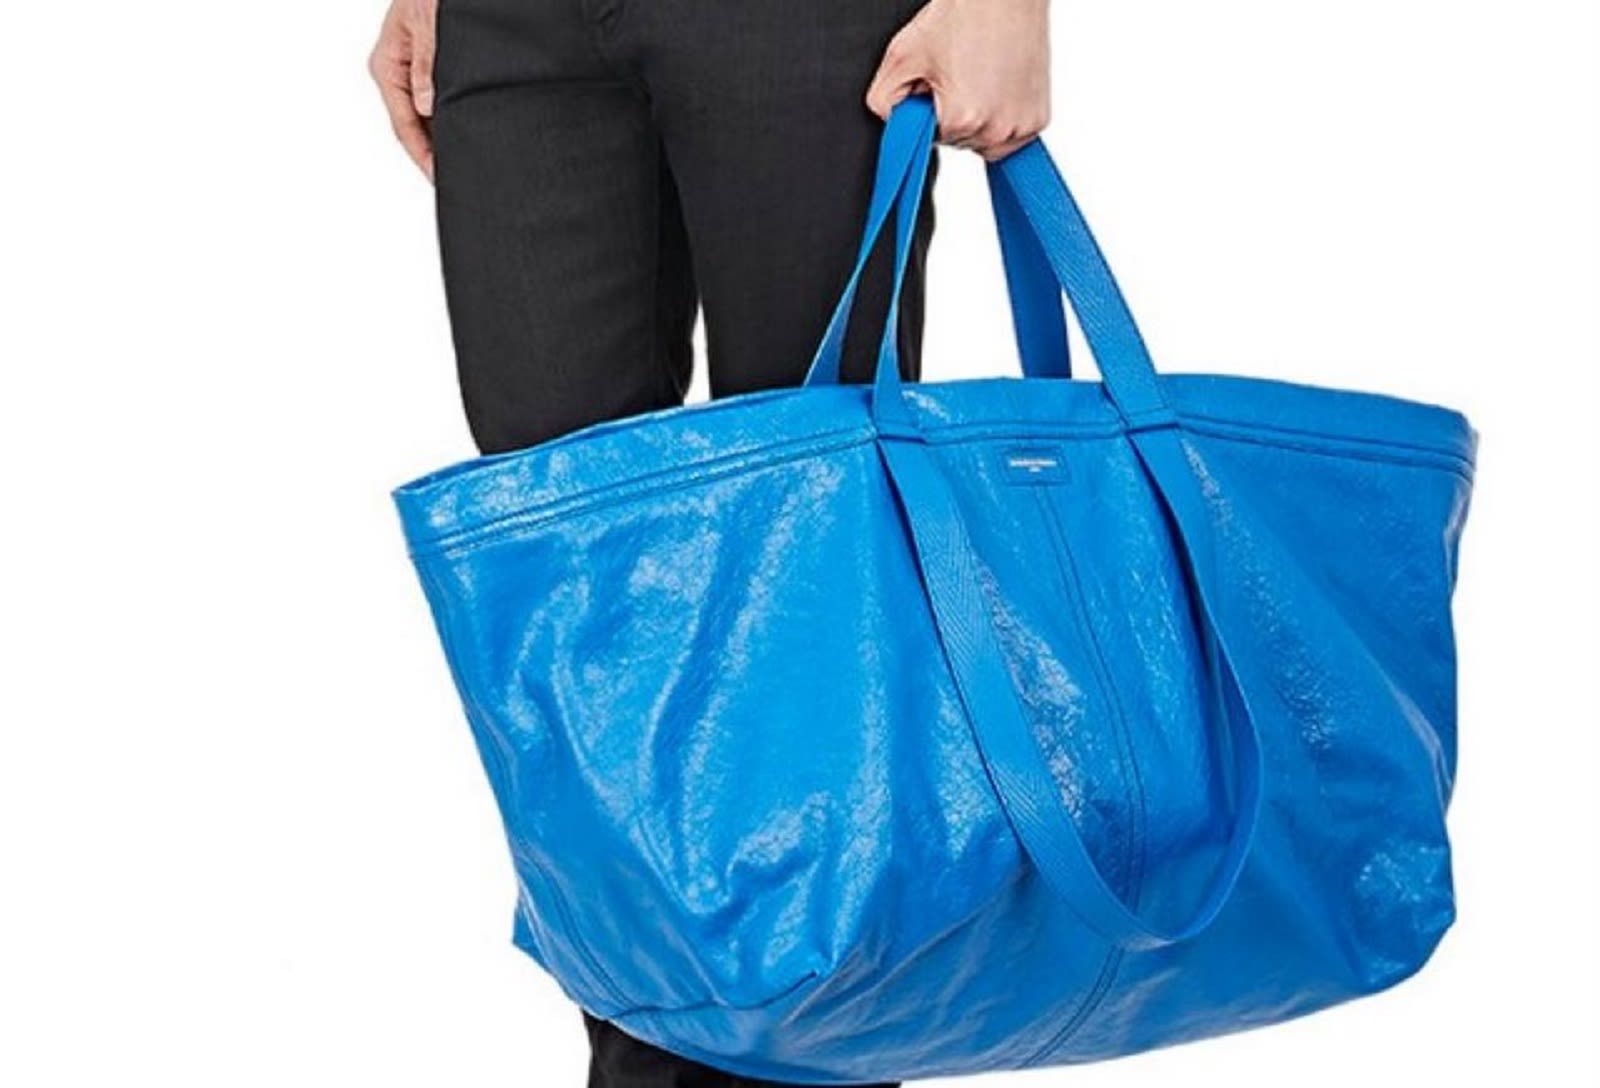 Balenciaga's $2,145 bag is just like Ikea's 99 cent tote